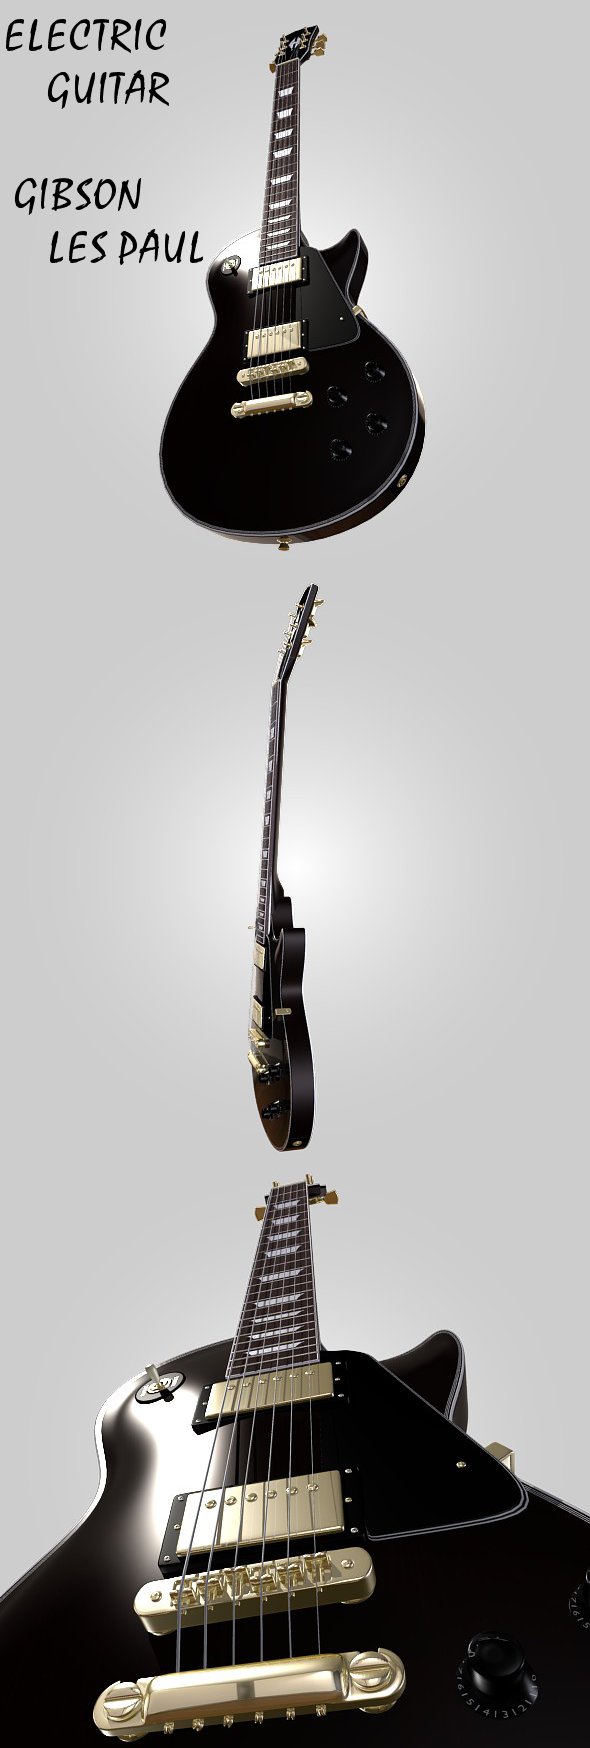 Electric guitar Gibson - 3Docean 110134